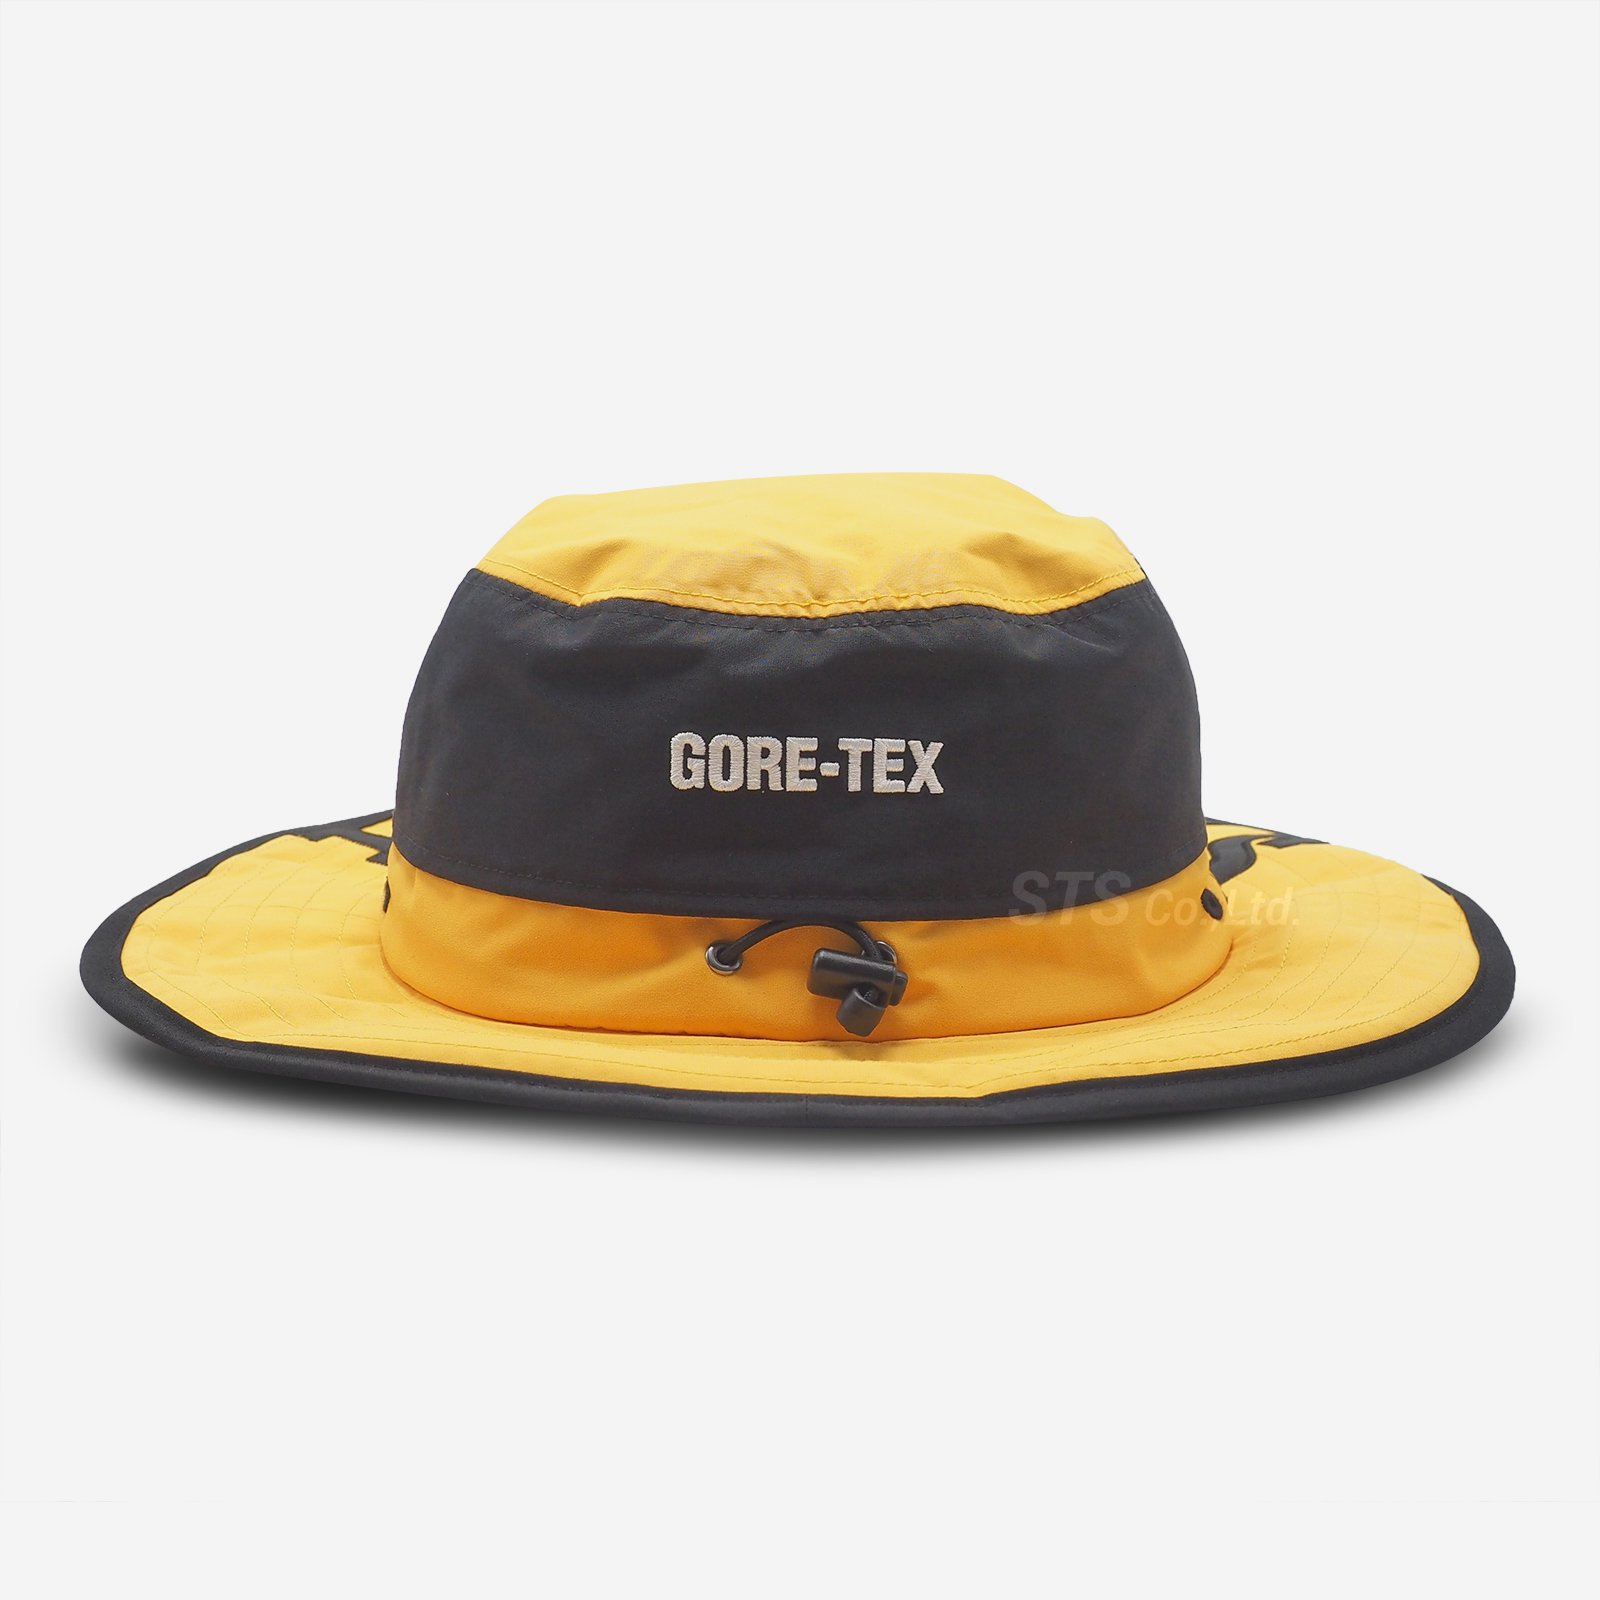 Supreme/The North Face Arc Logo Horizon Breeze Hat - ParkSIDER